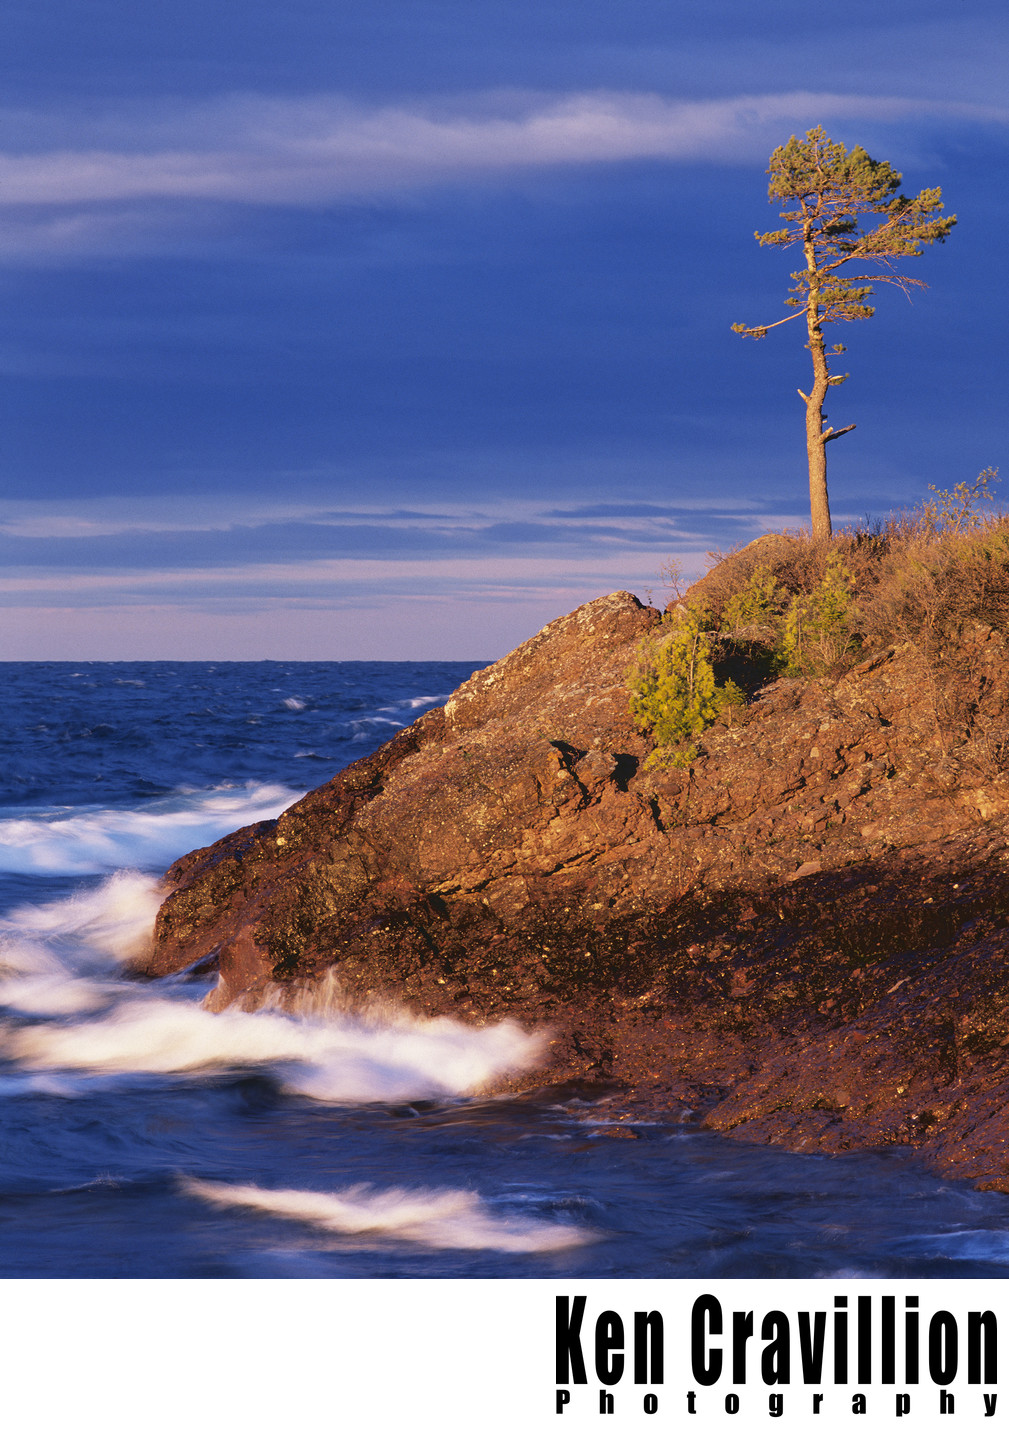 Copper Harbor Michigan Lake Superior Tree Waves Photo